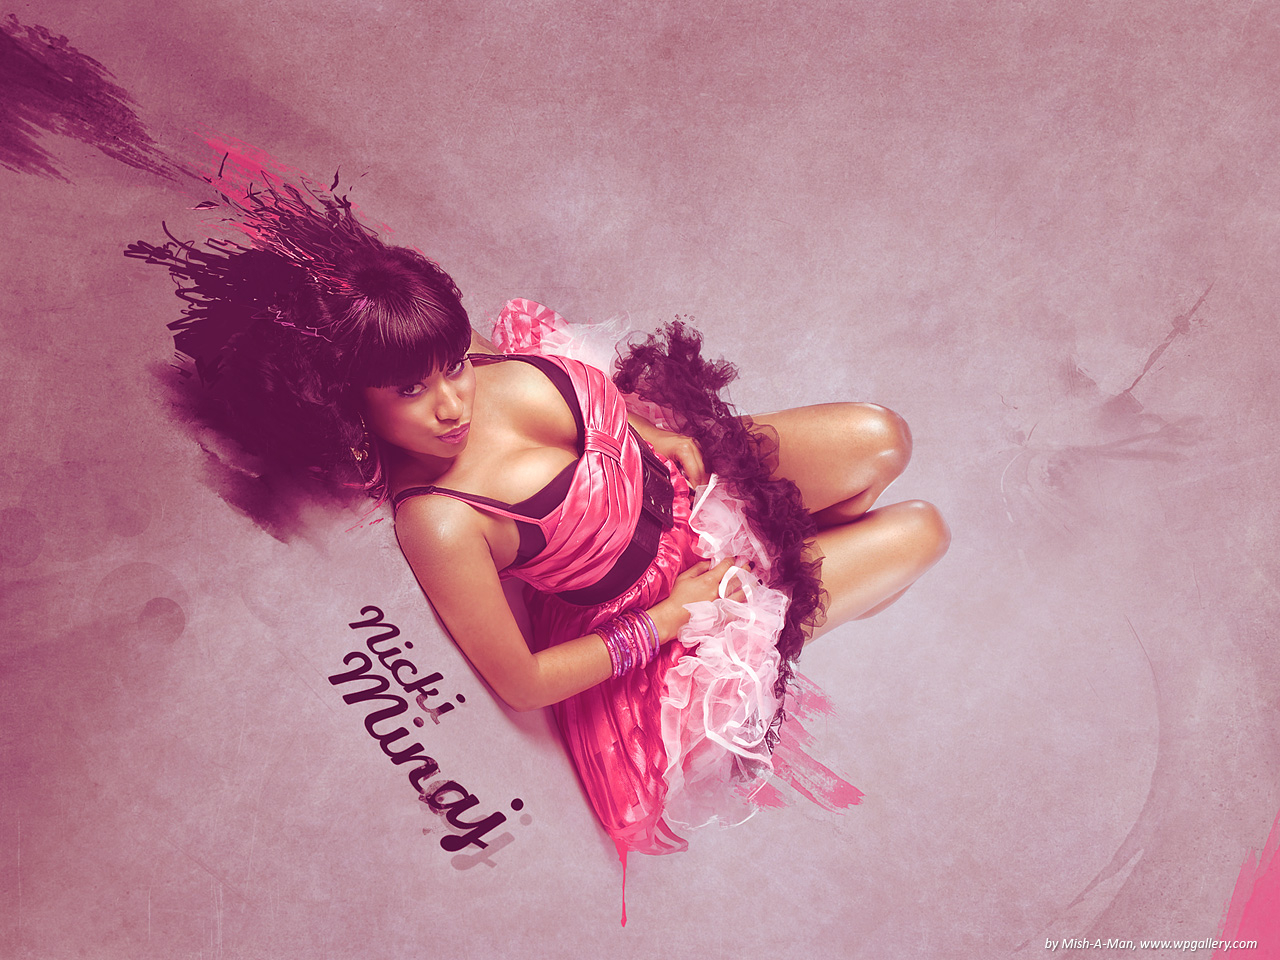 Nicki Minaj for 1280 x 960 resolution